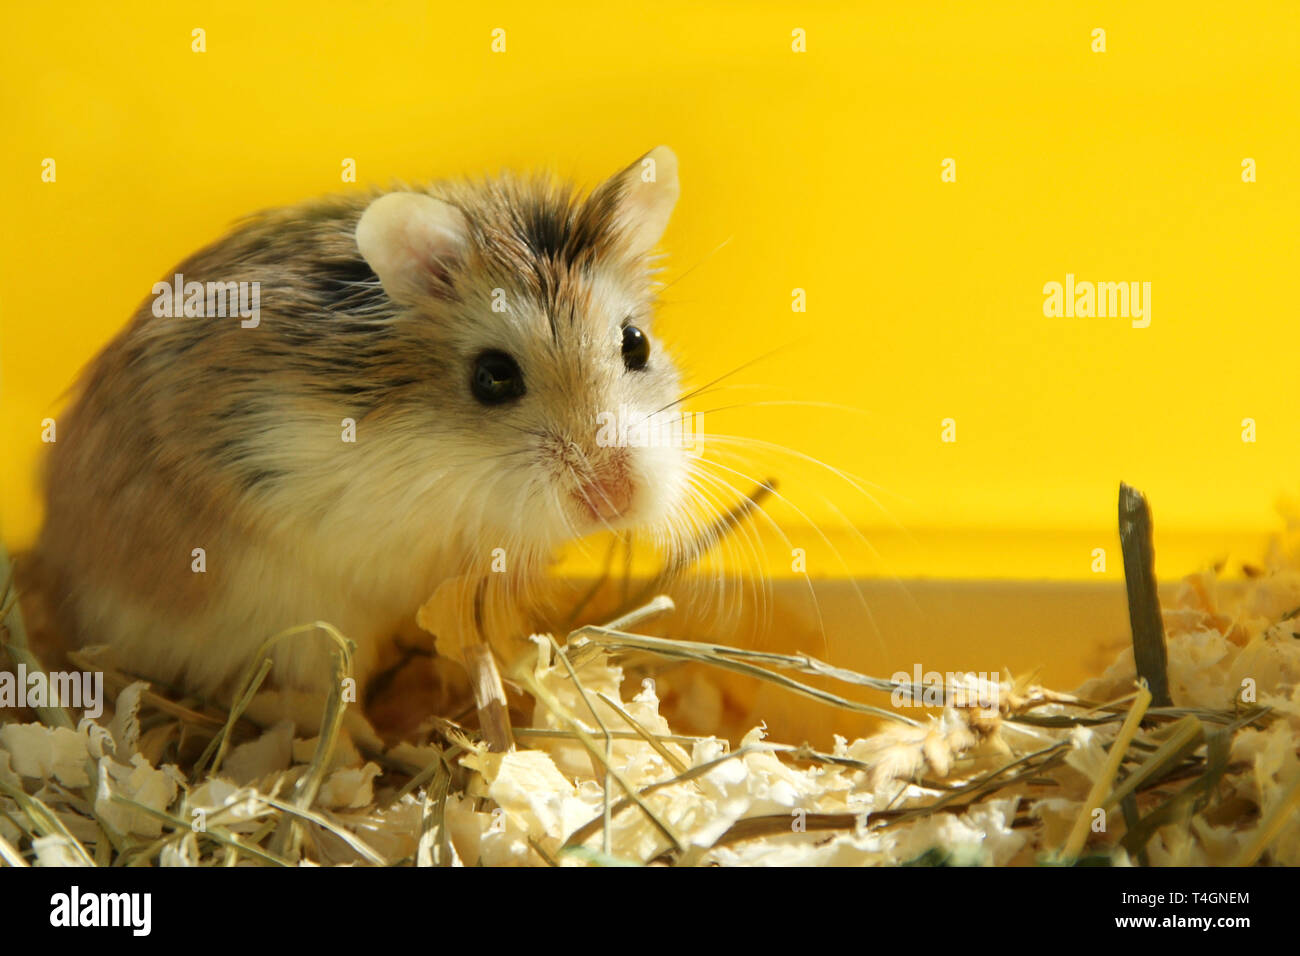 Roborovski hamster cute pet looking - yellow background Stock Photo